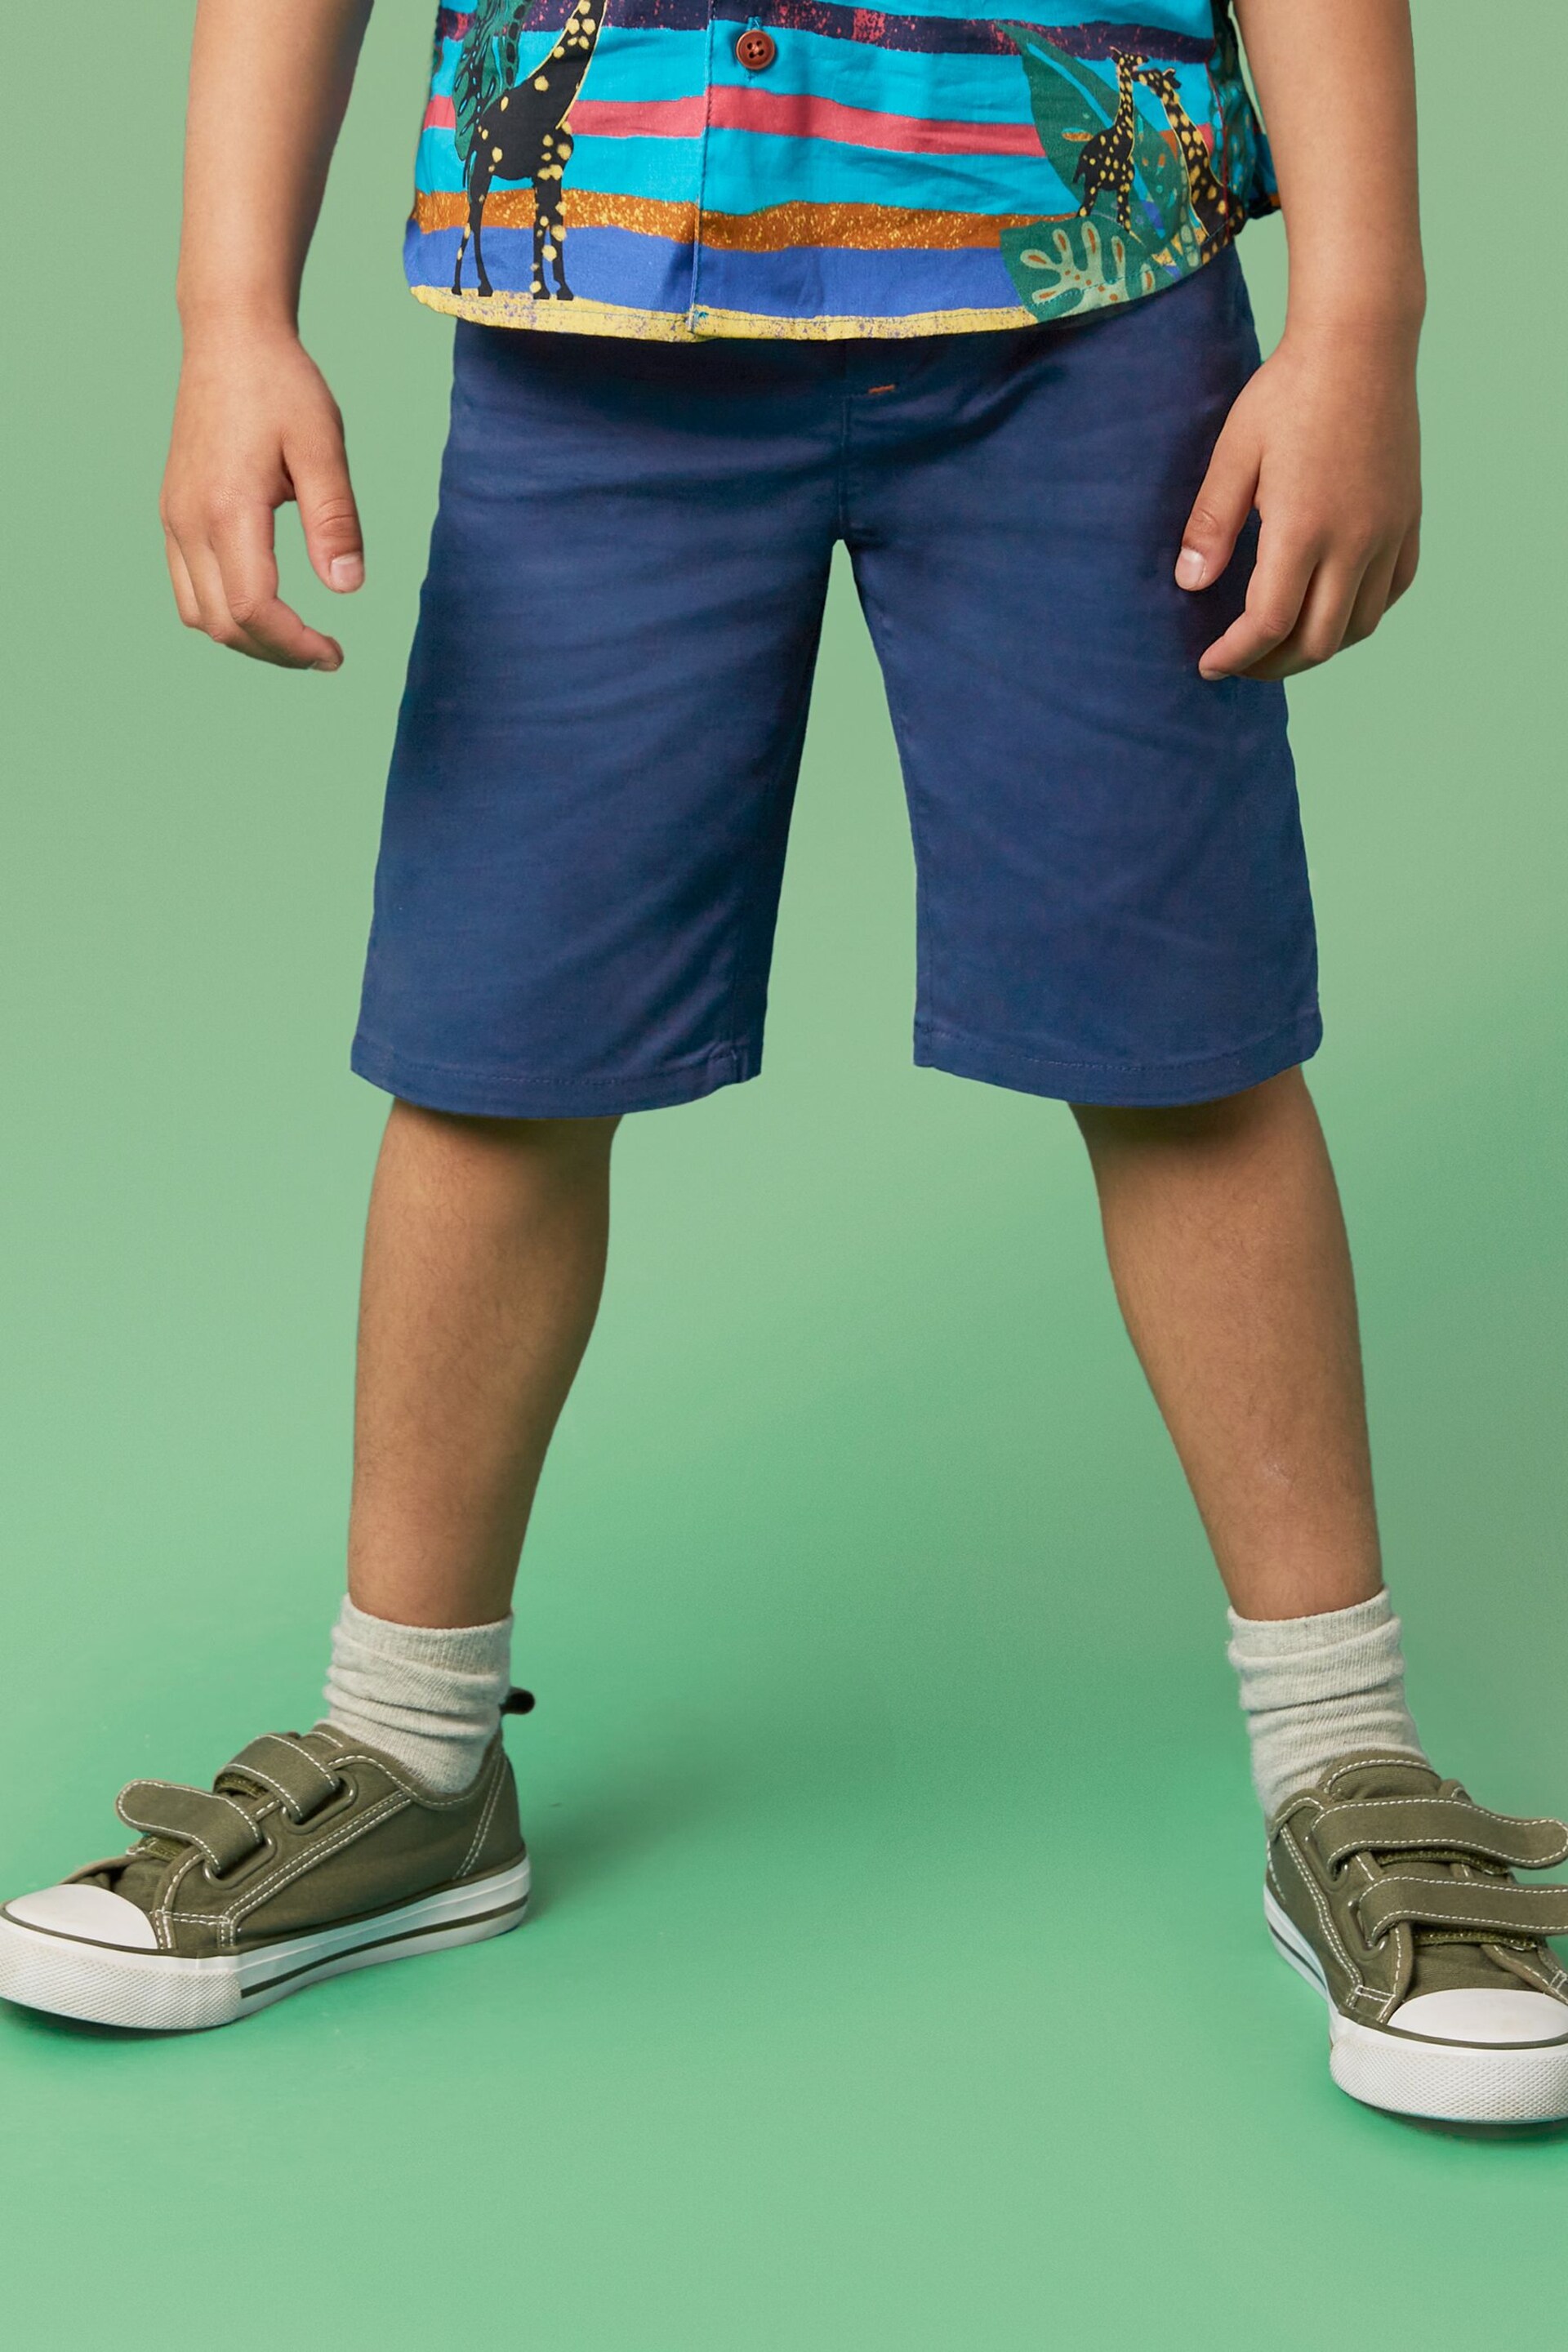 White Stuff Blue Cole Chino Shorts - Image 1 of 4